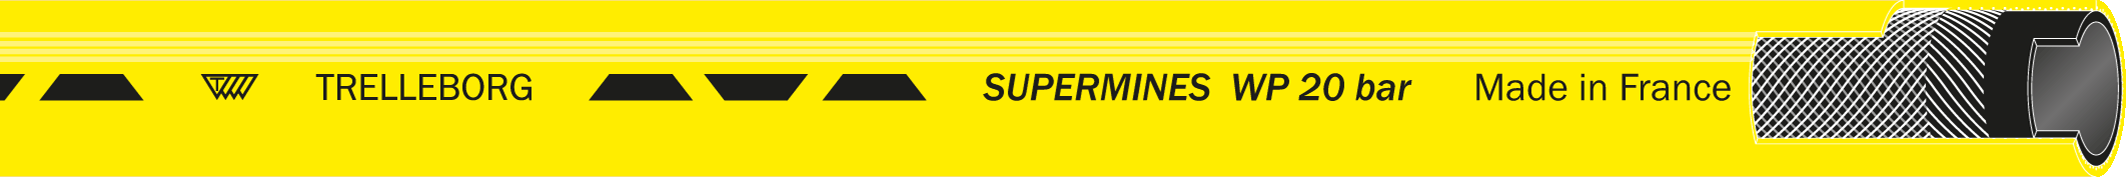 SUPERMINES_inf25_TSALES_300dpi_gif_180mmx15mm